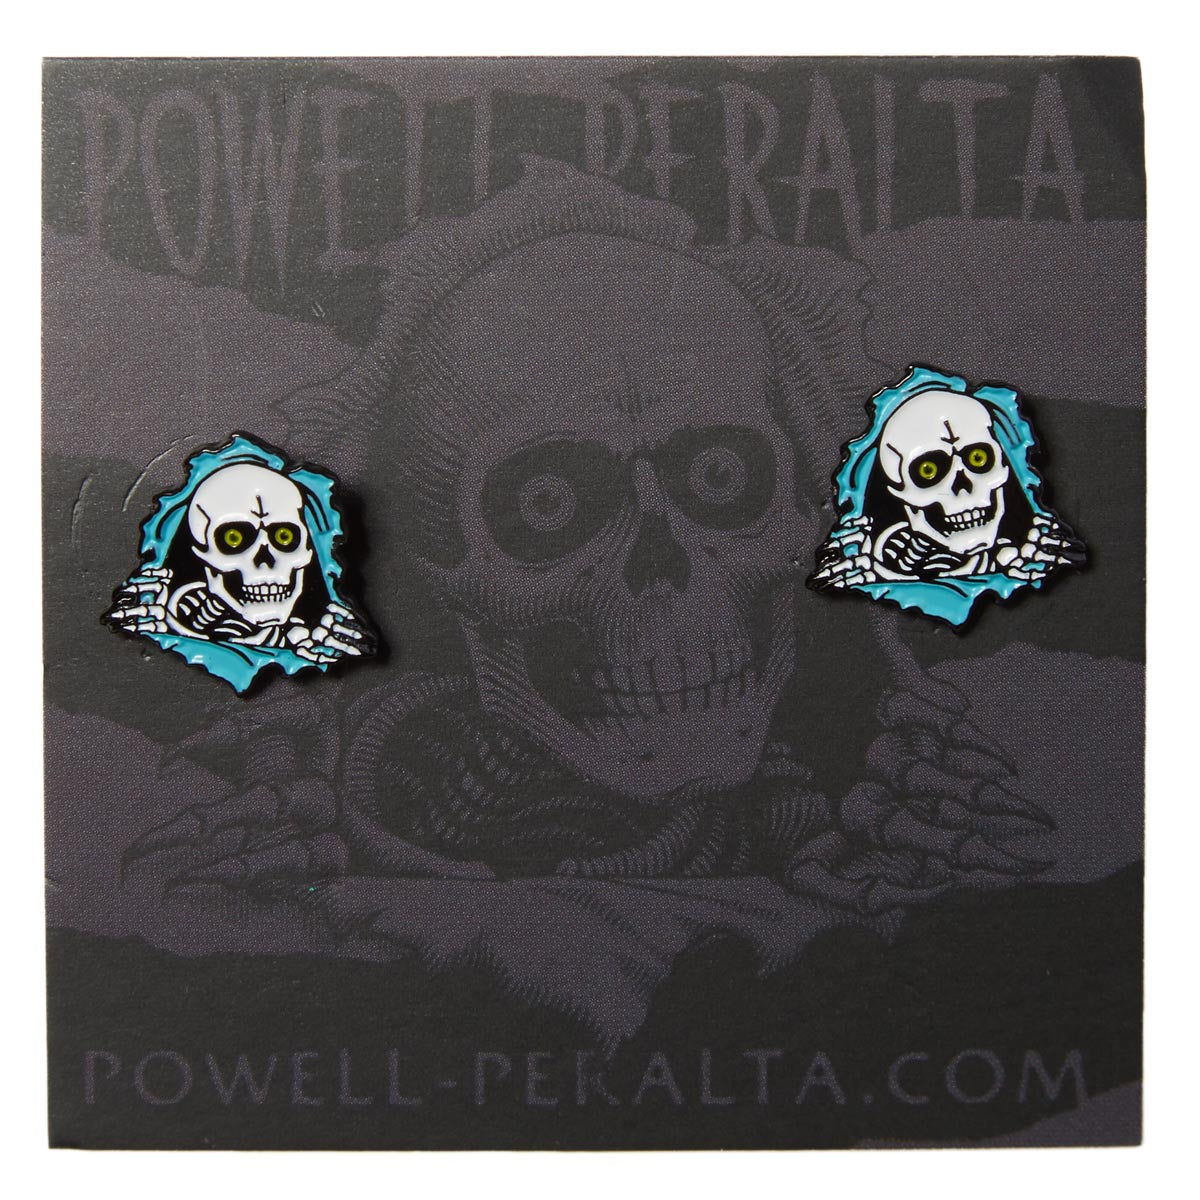 Powell Peralta Ripper Earrings - Blue image 1